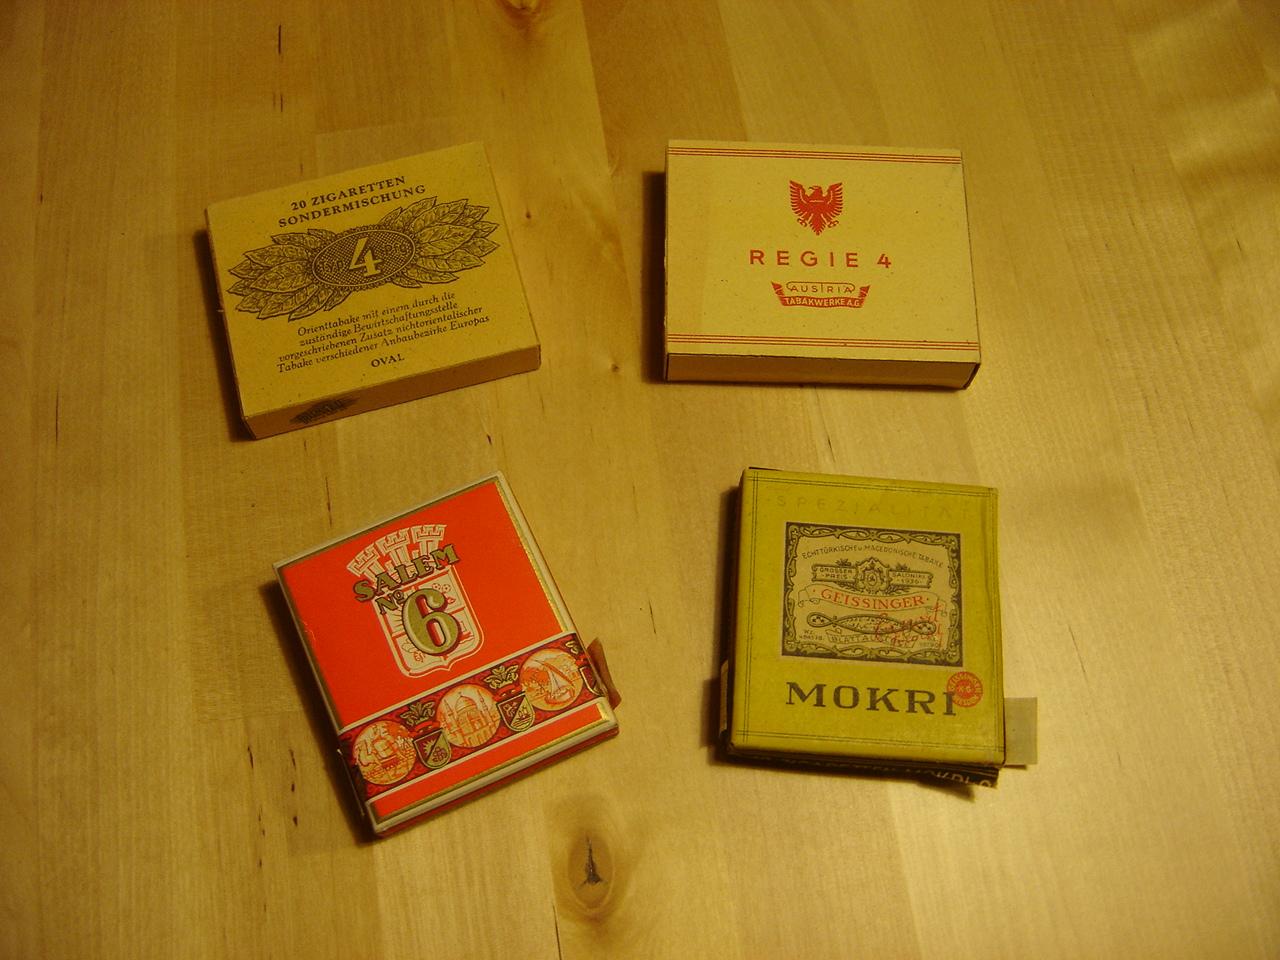 German cigarettes